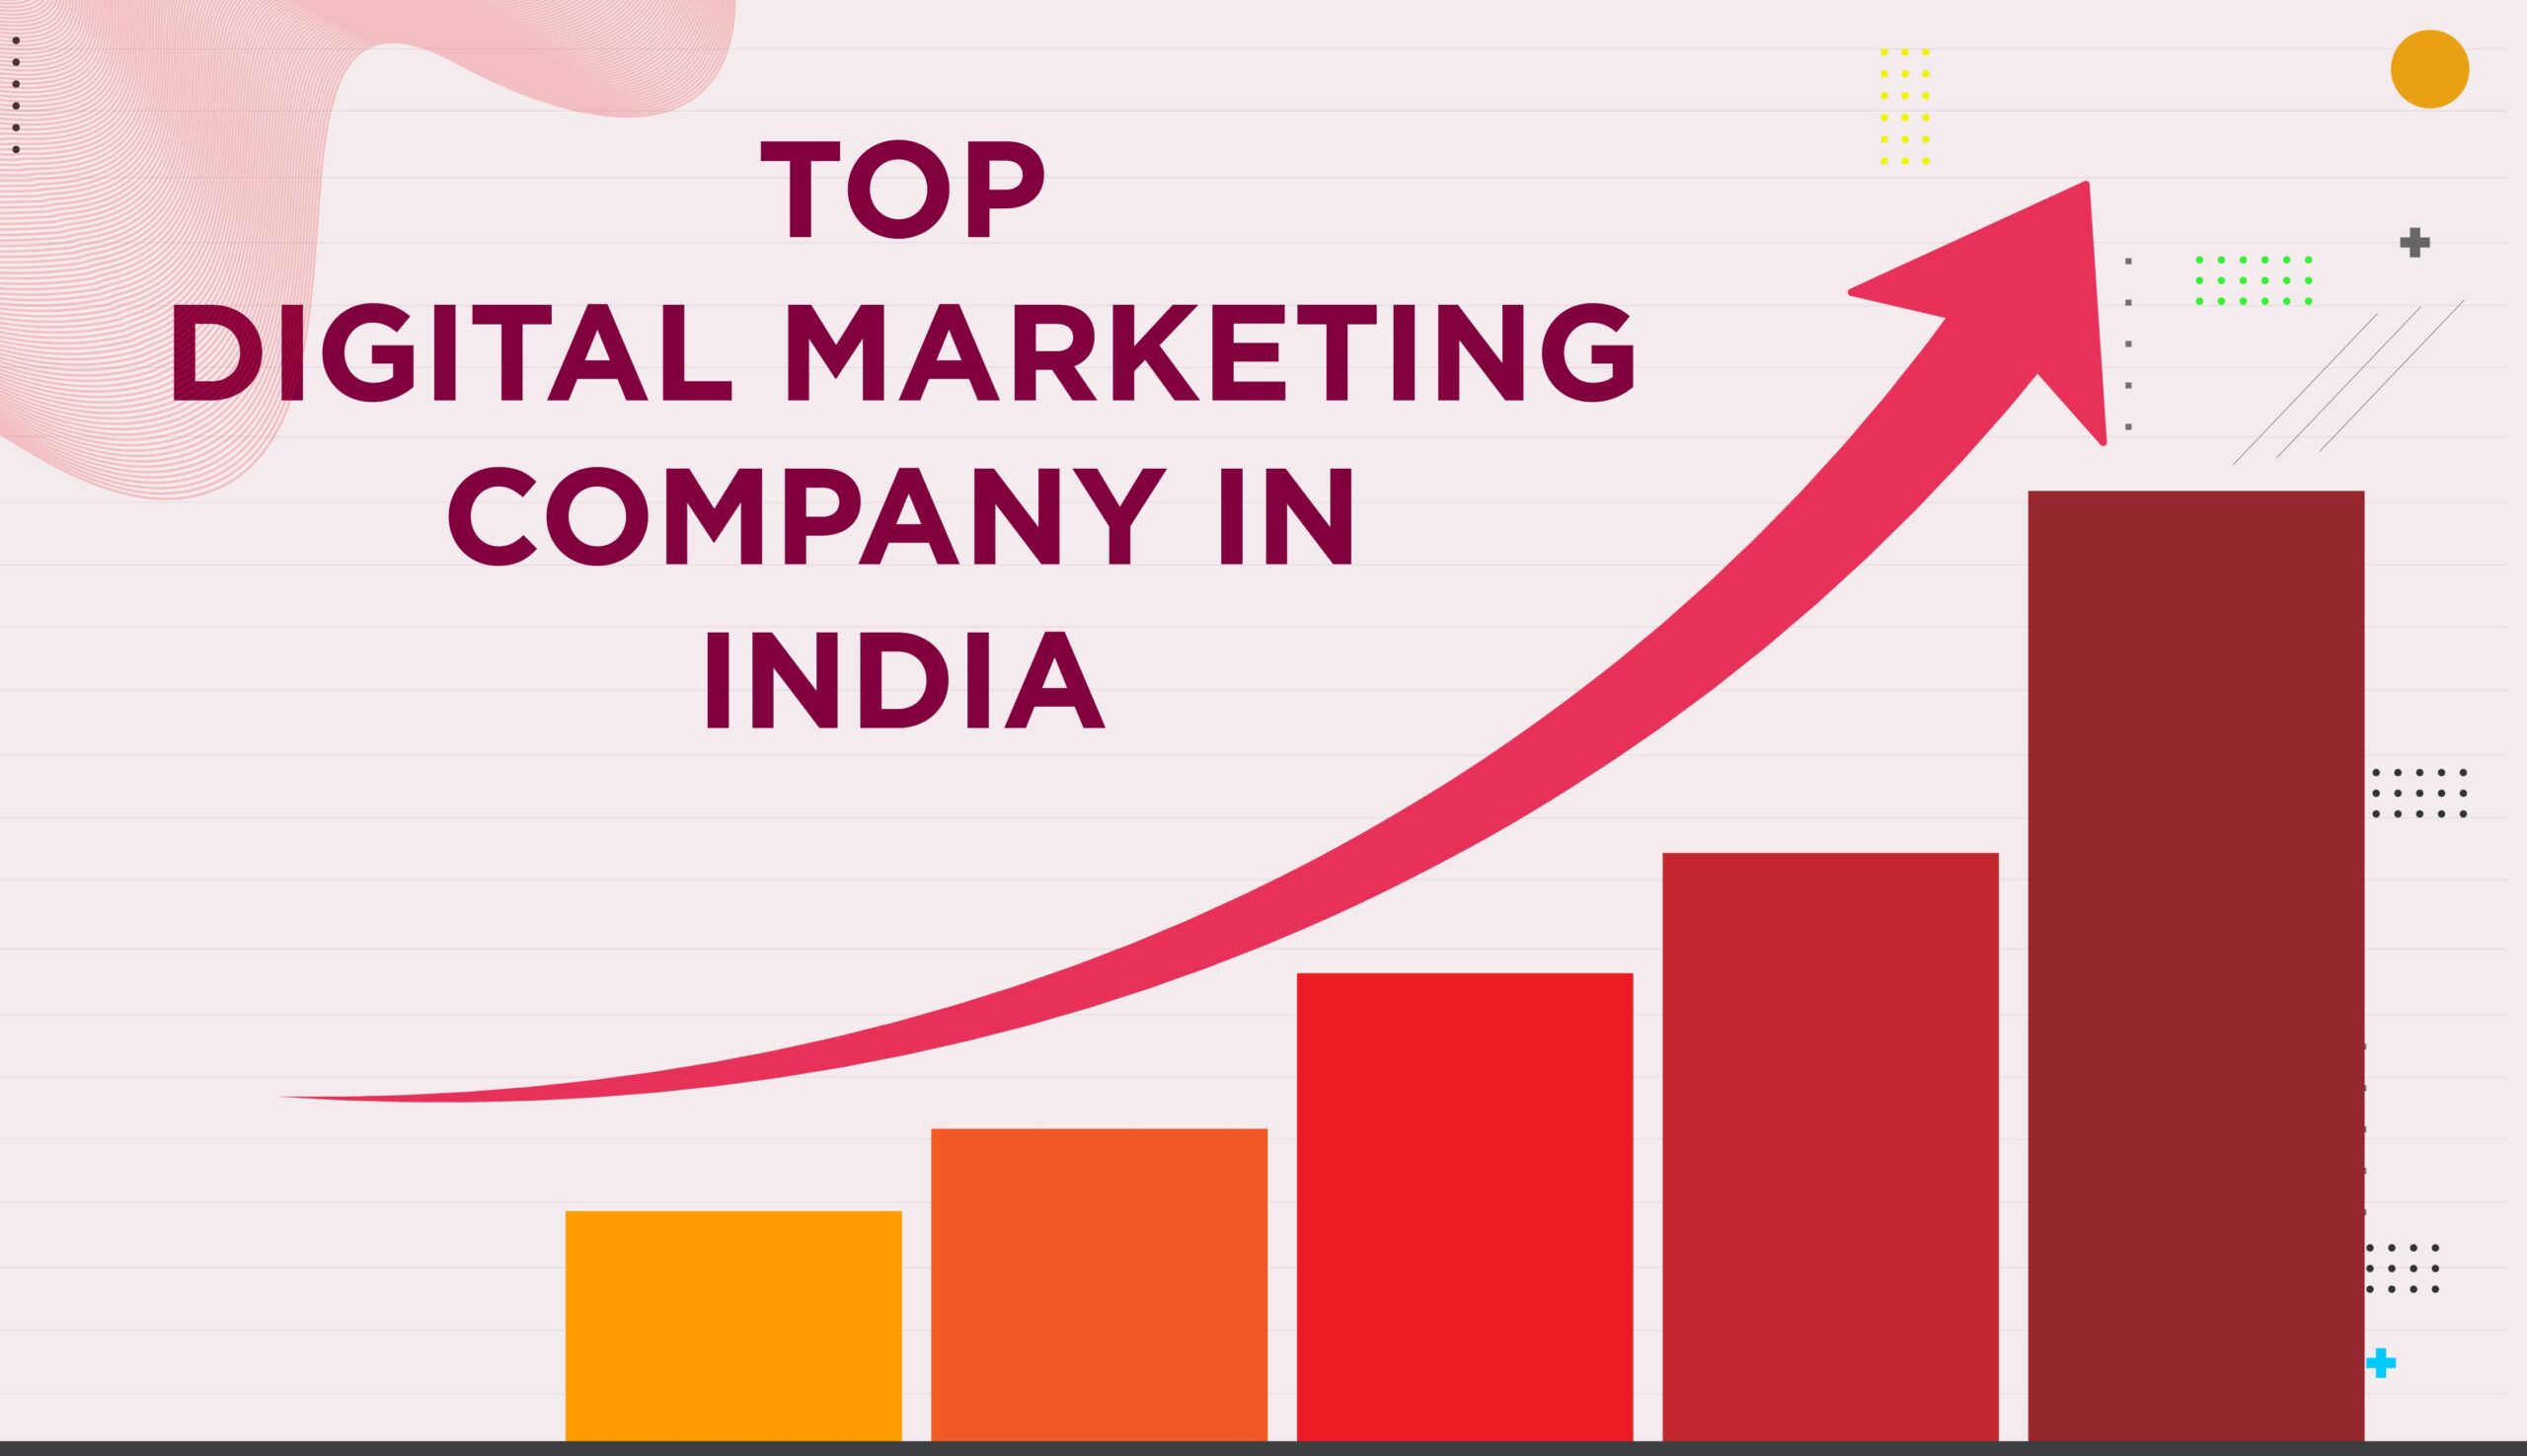 Top Digital Marketing Company In India